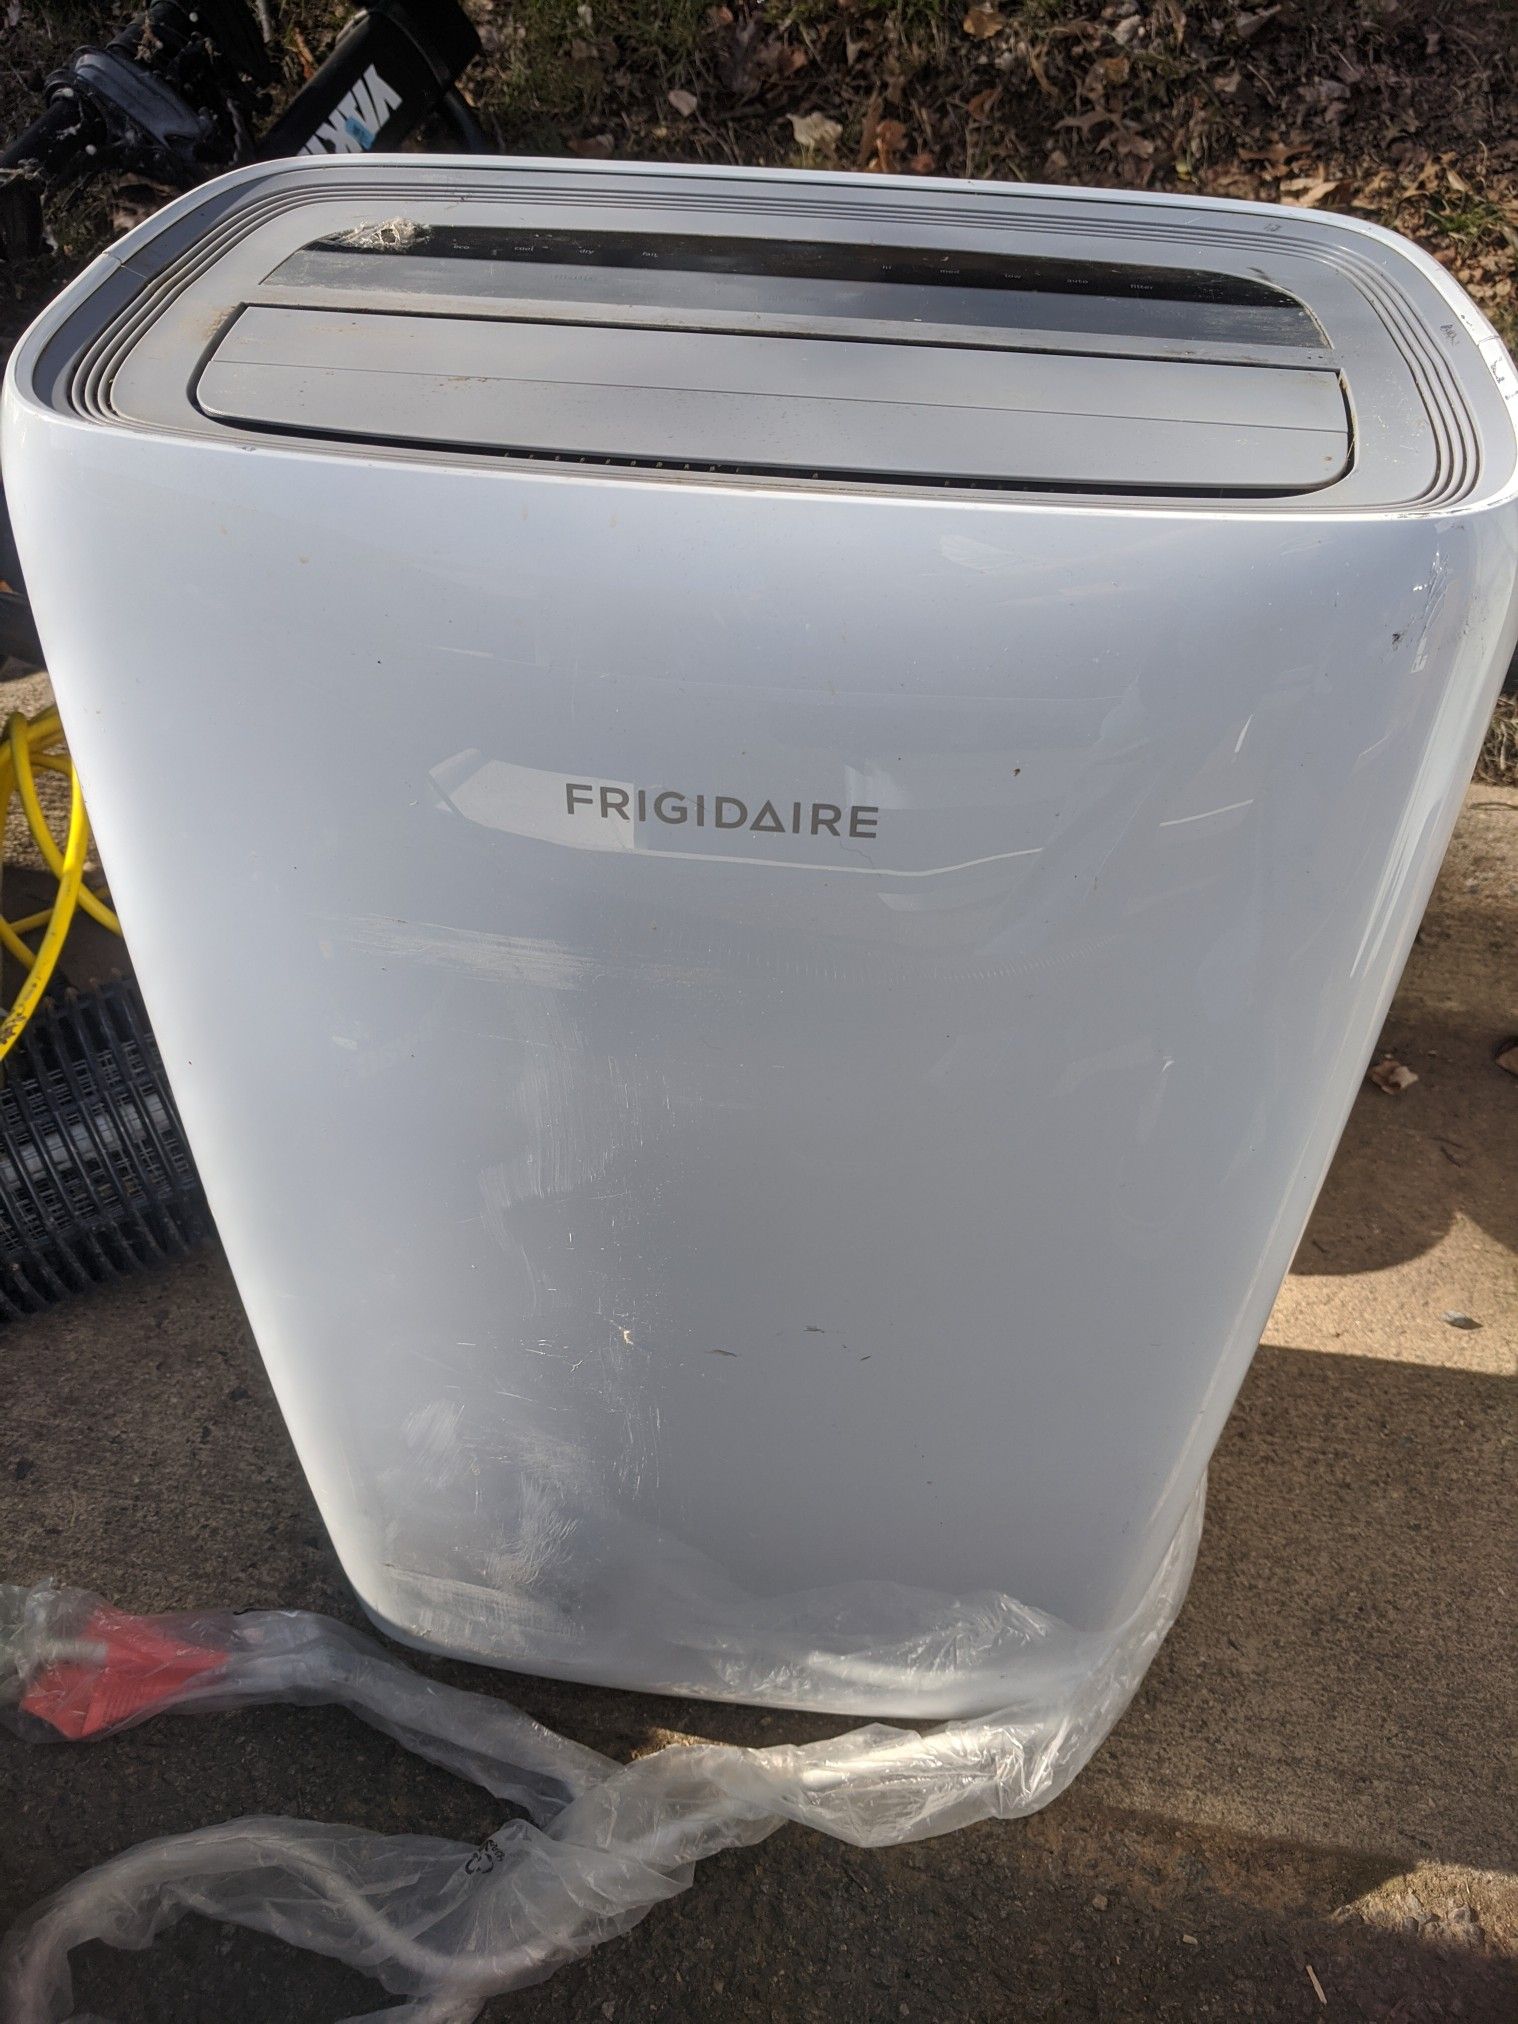 Frigidaire 8,000 BTU 3-Speed Portable Air Conditioner with Dehumidifier